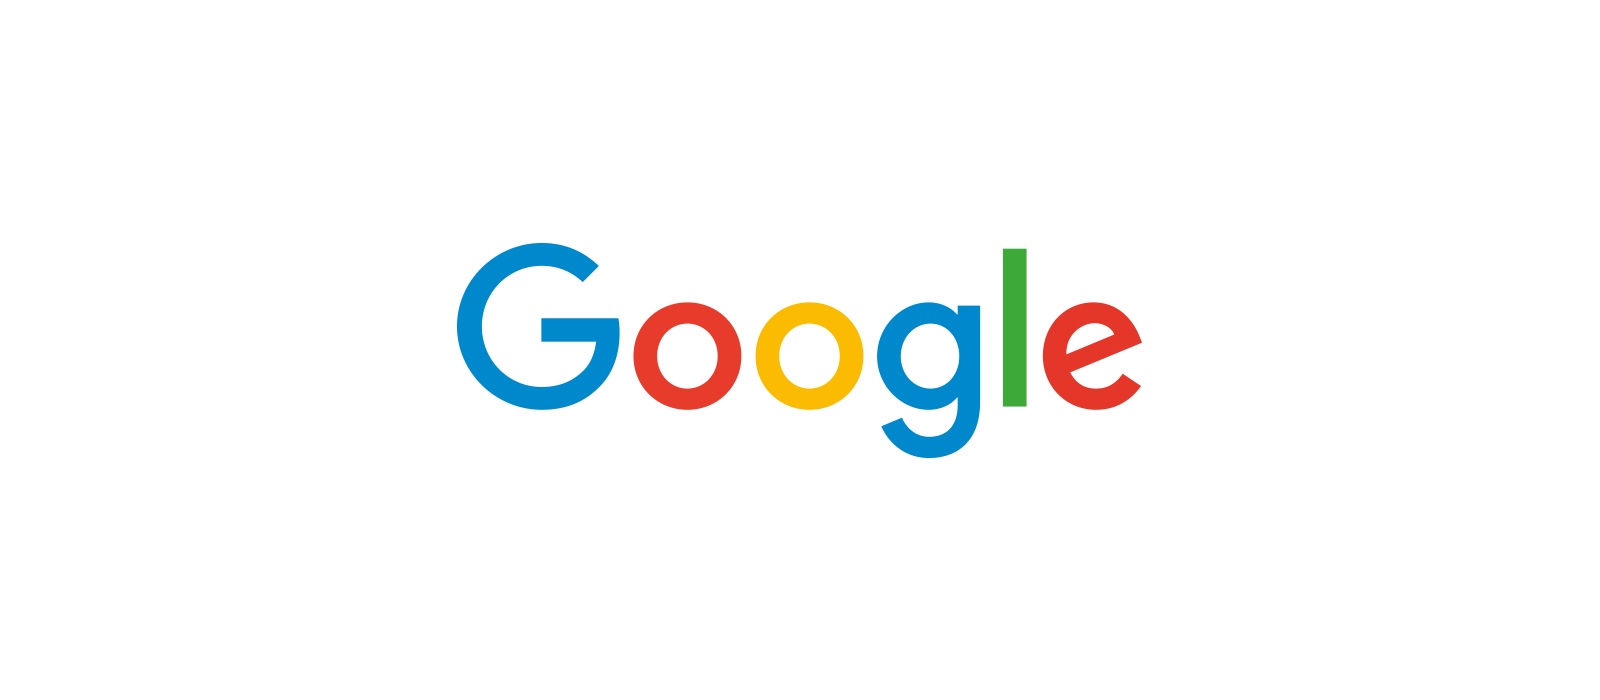 Google header image